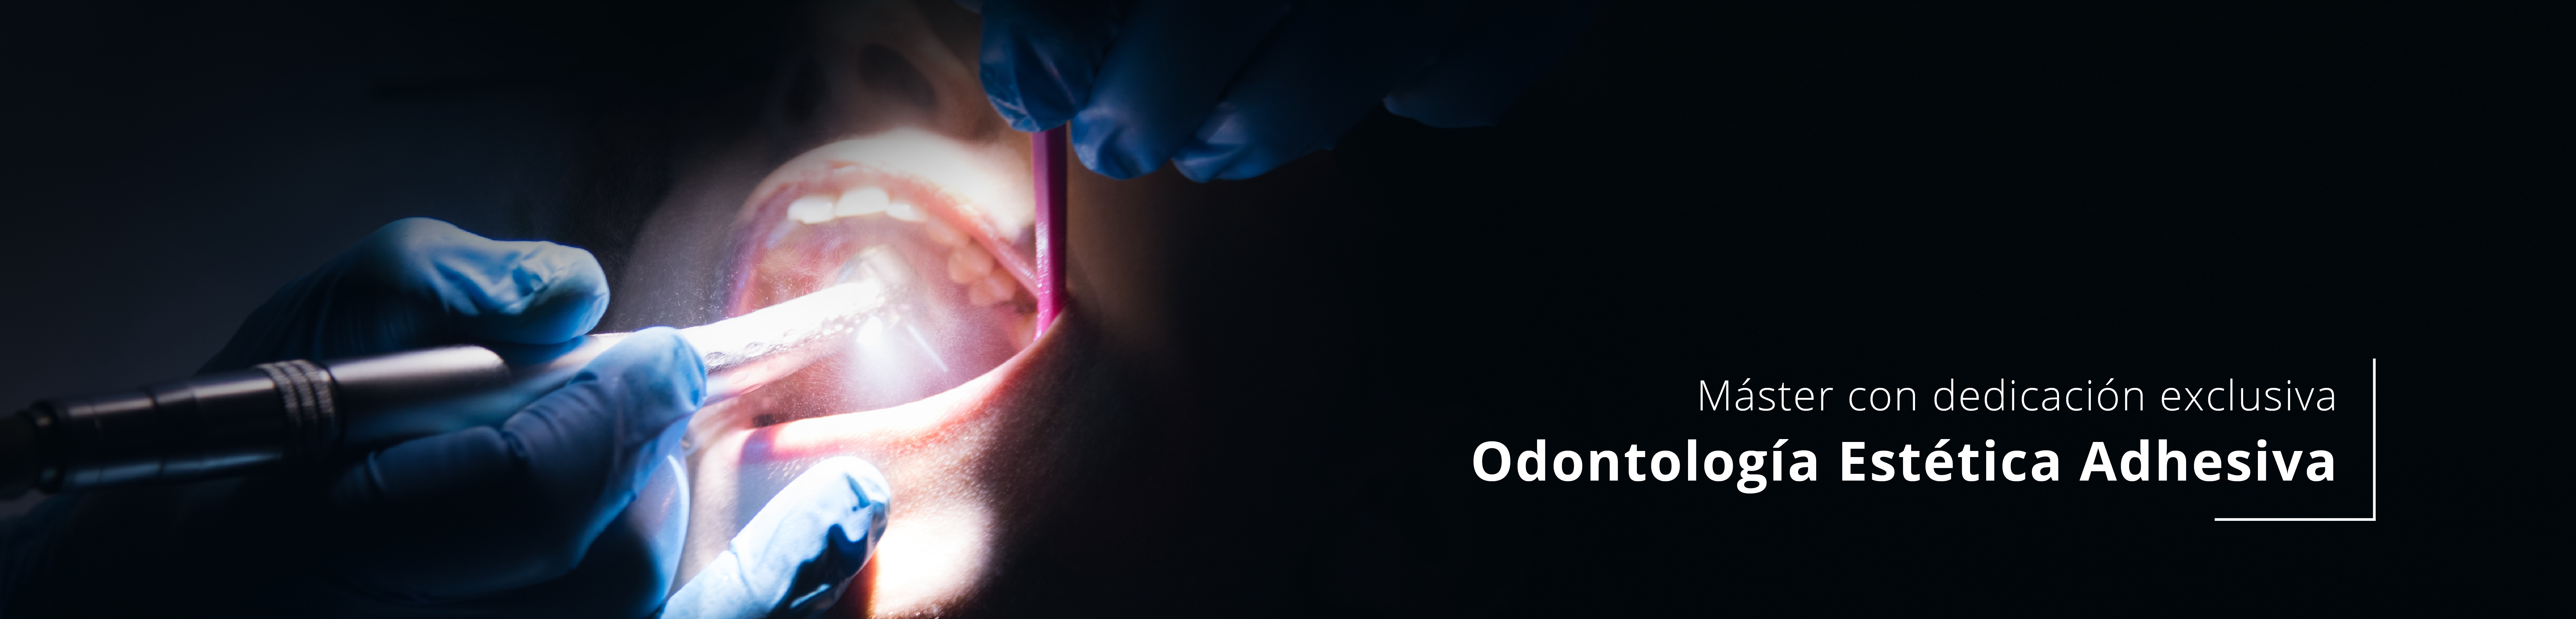 Odontología Estética y Rehabilitación Adhesiva (M.O.E.R.A-UCAM)